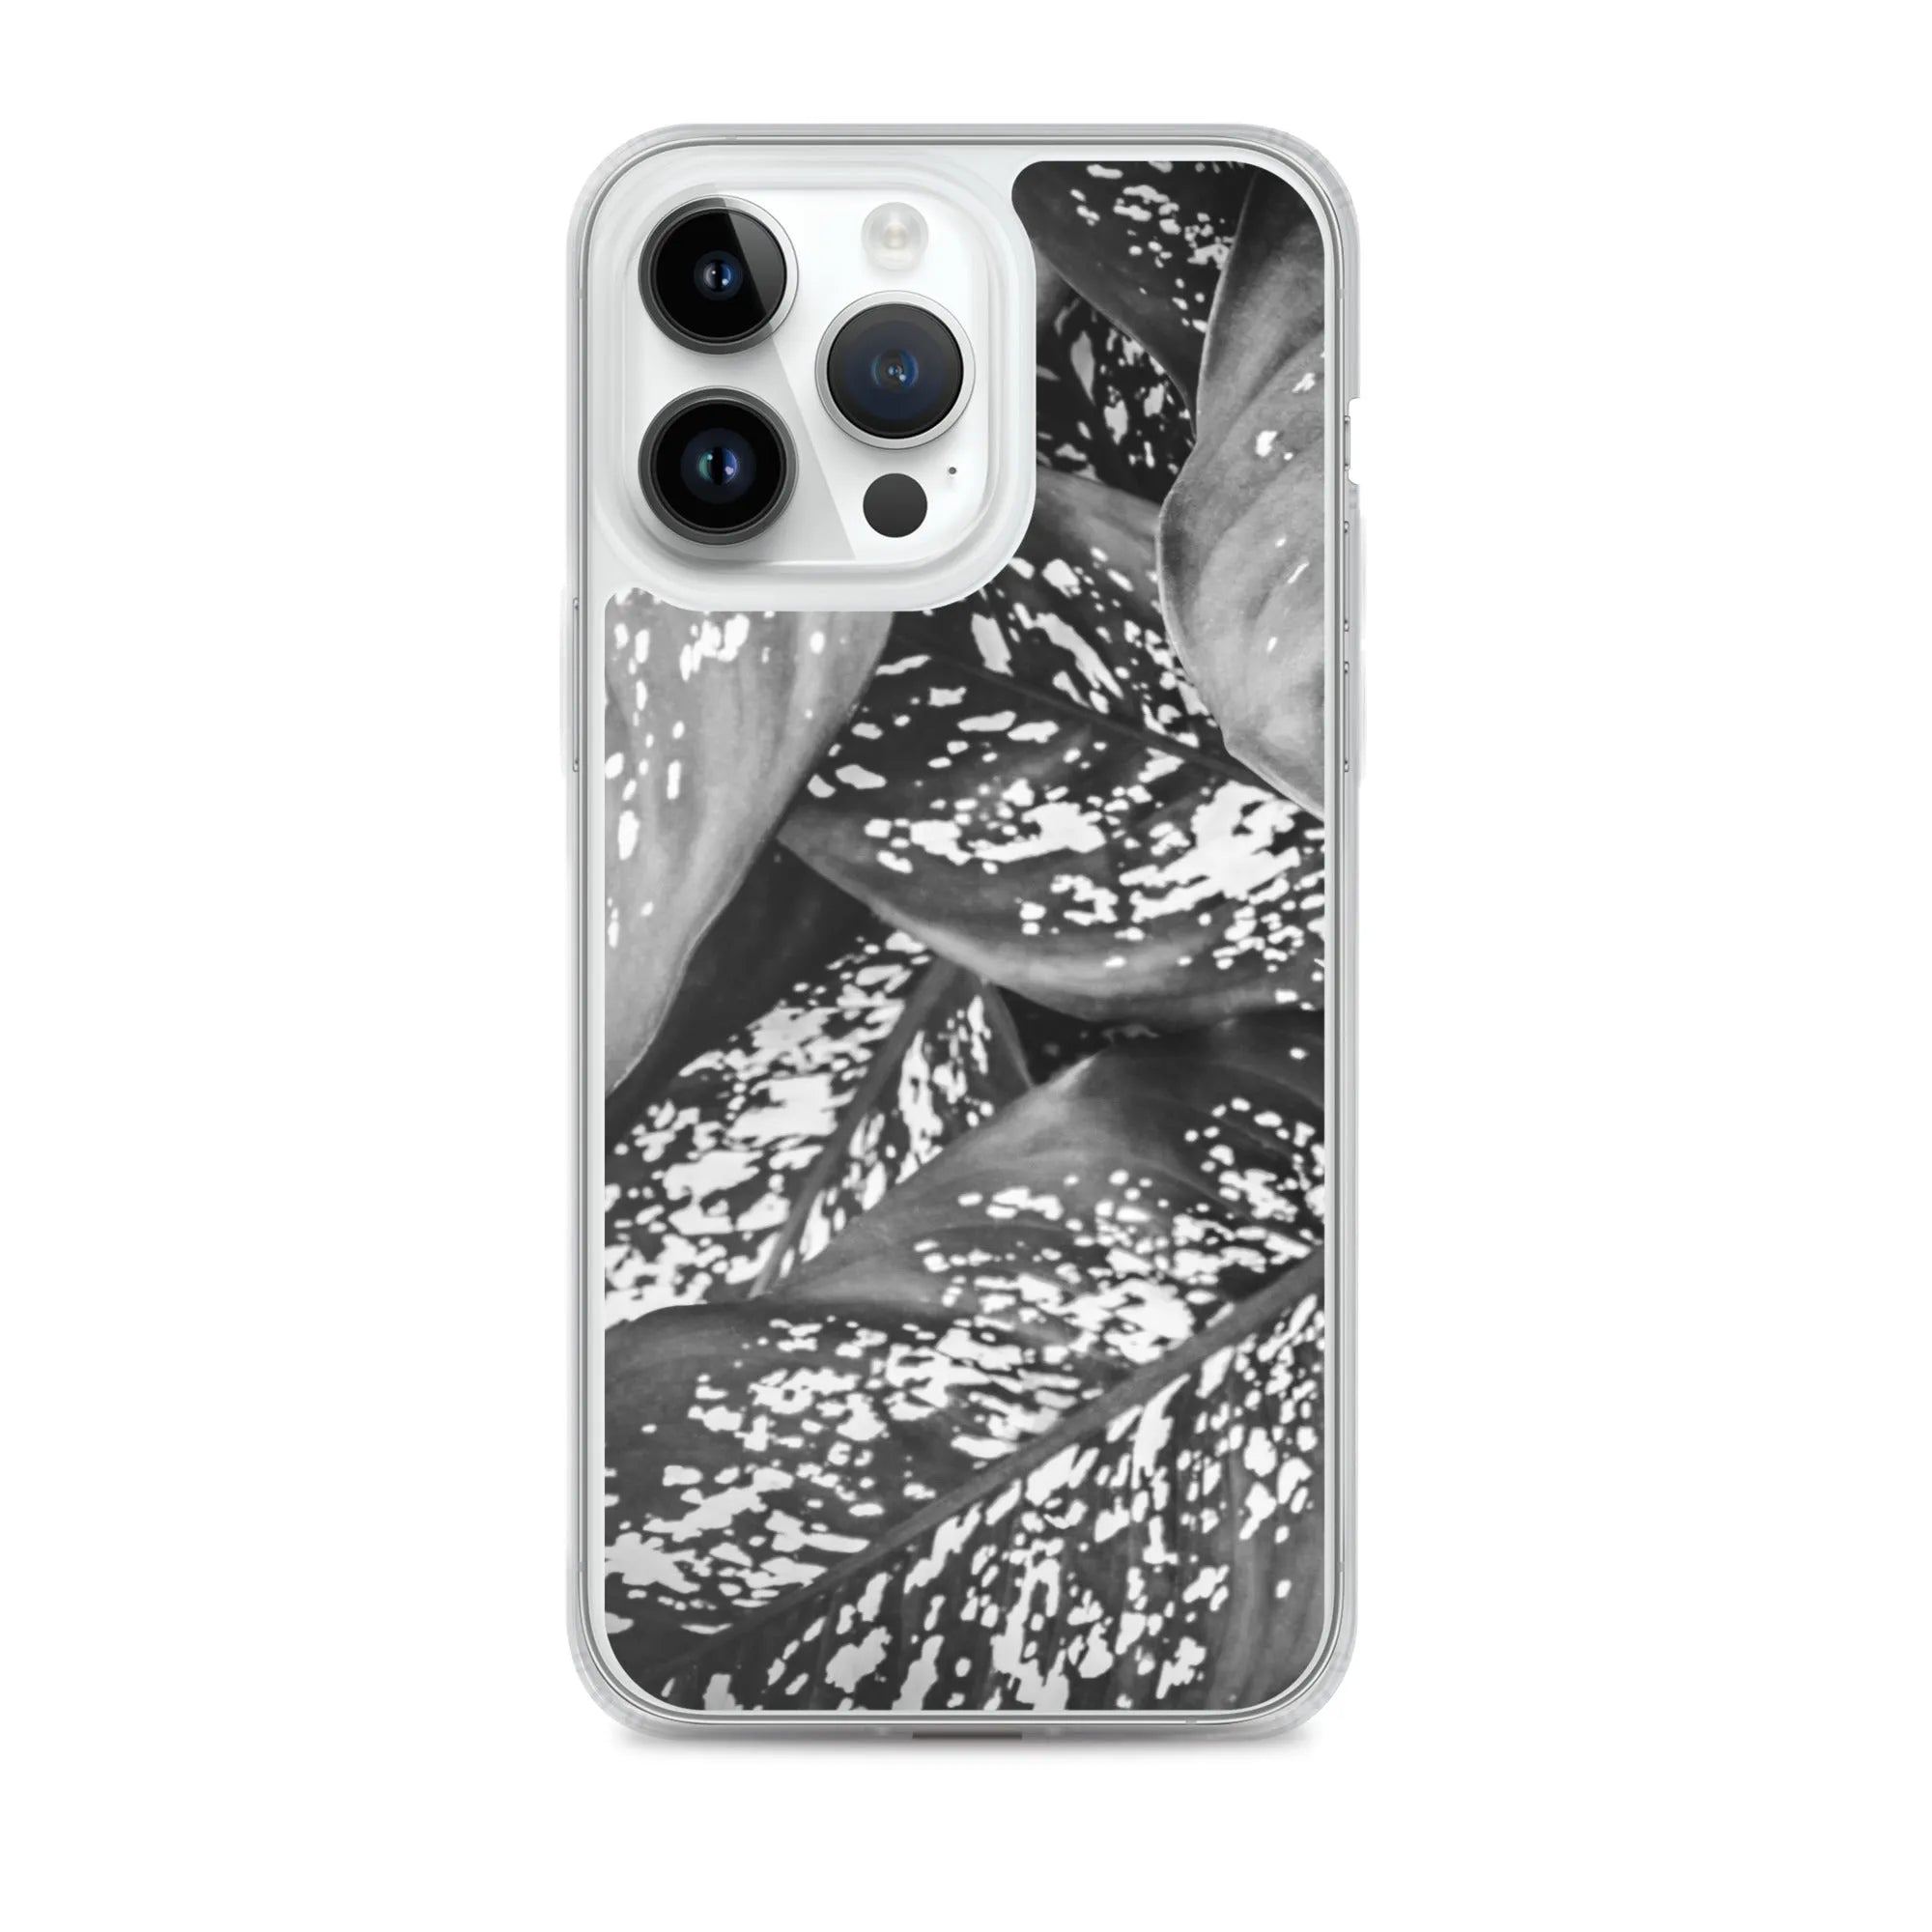 Pitter Splatter Botanical Art Iphone Case - Black And White - Iphone 14 Pro Max - Mobile Phone Cases - Aesthetic Art